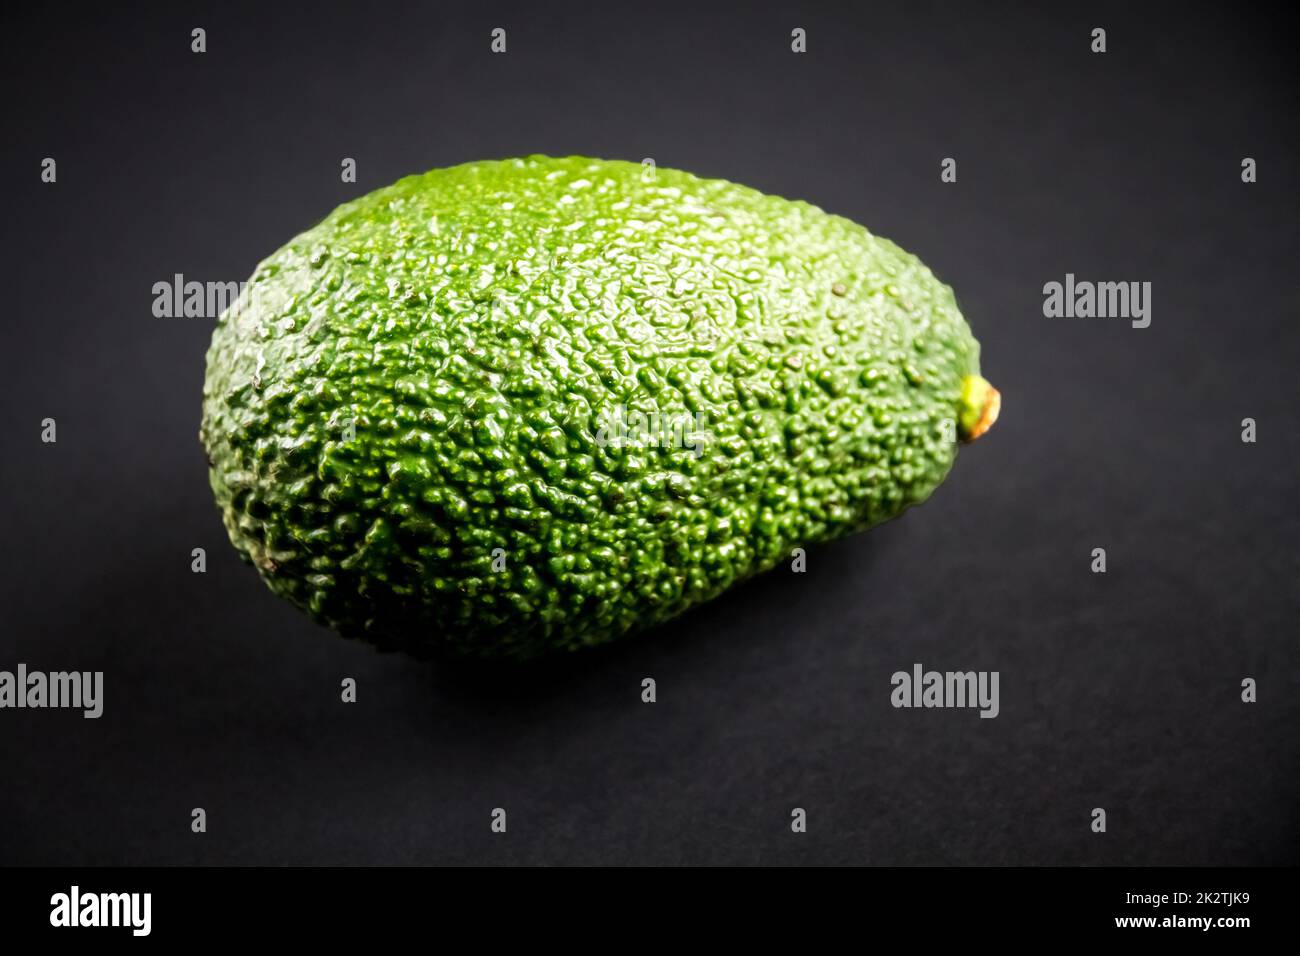 Avocado isolated on a black background Stock Photo